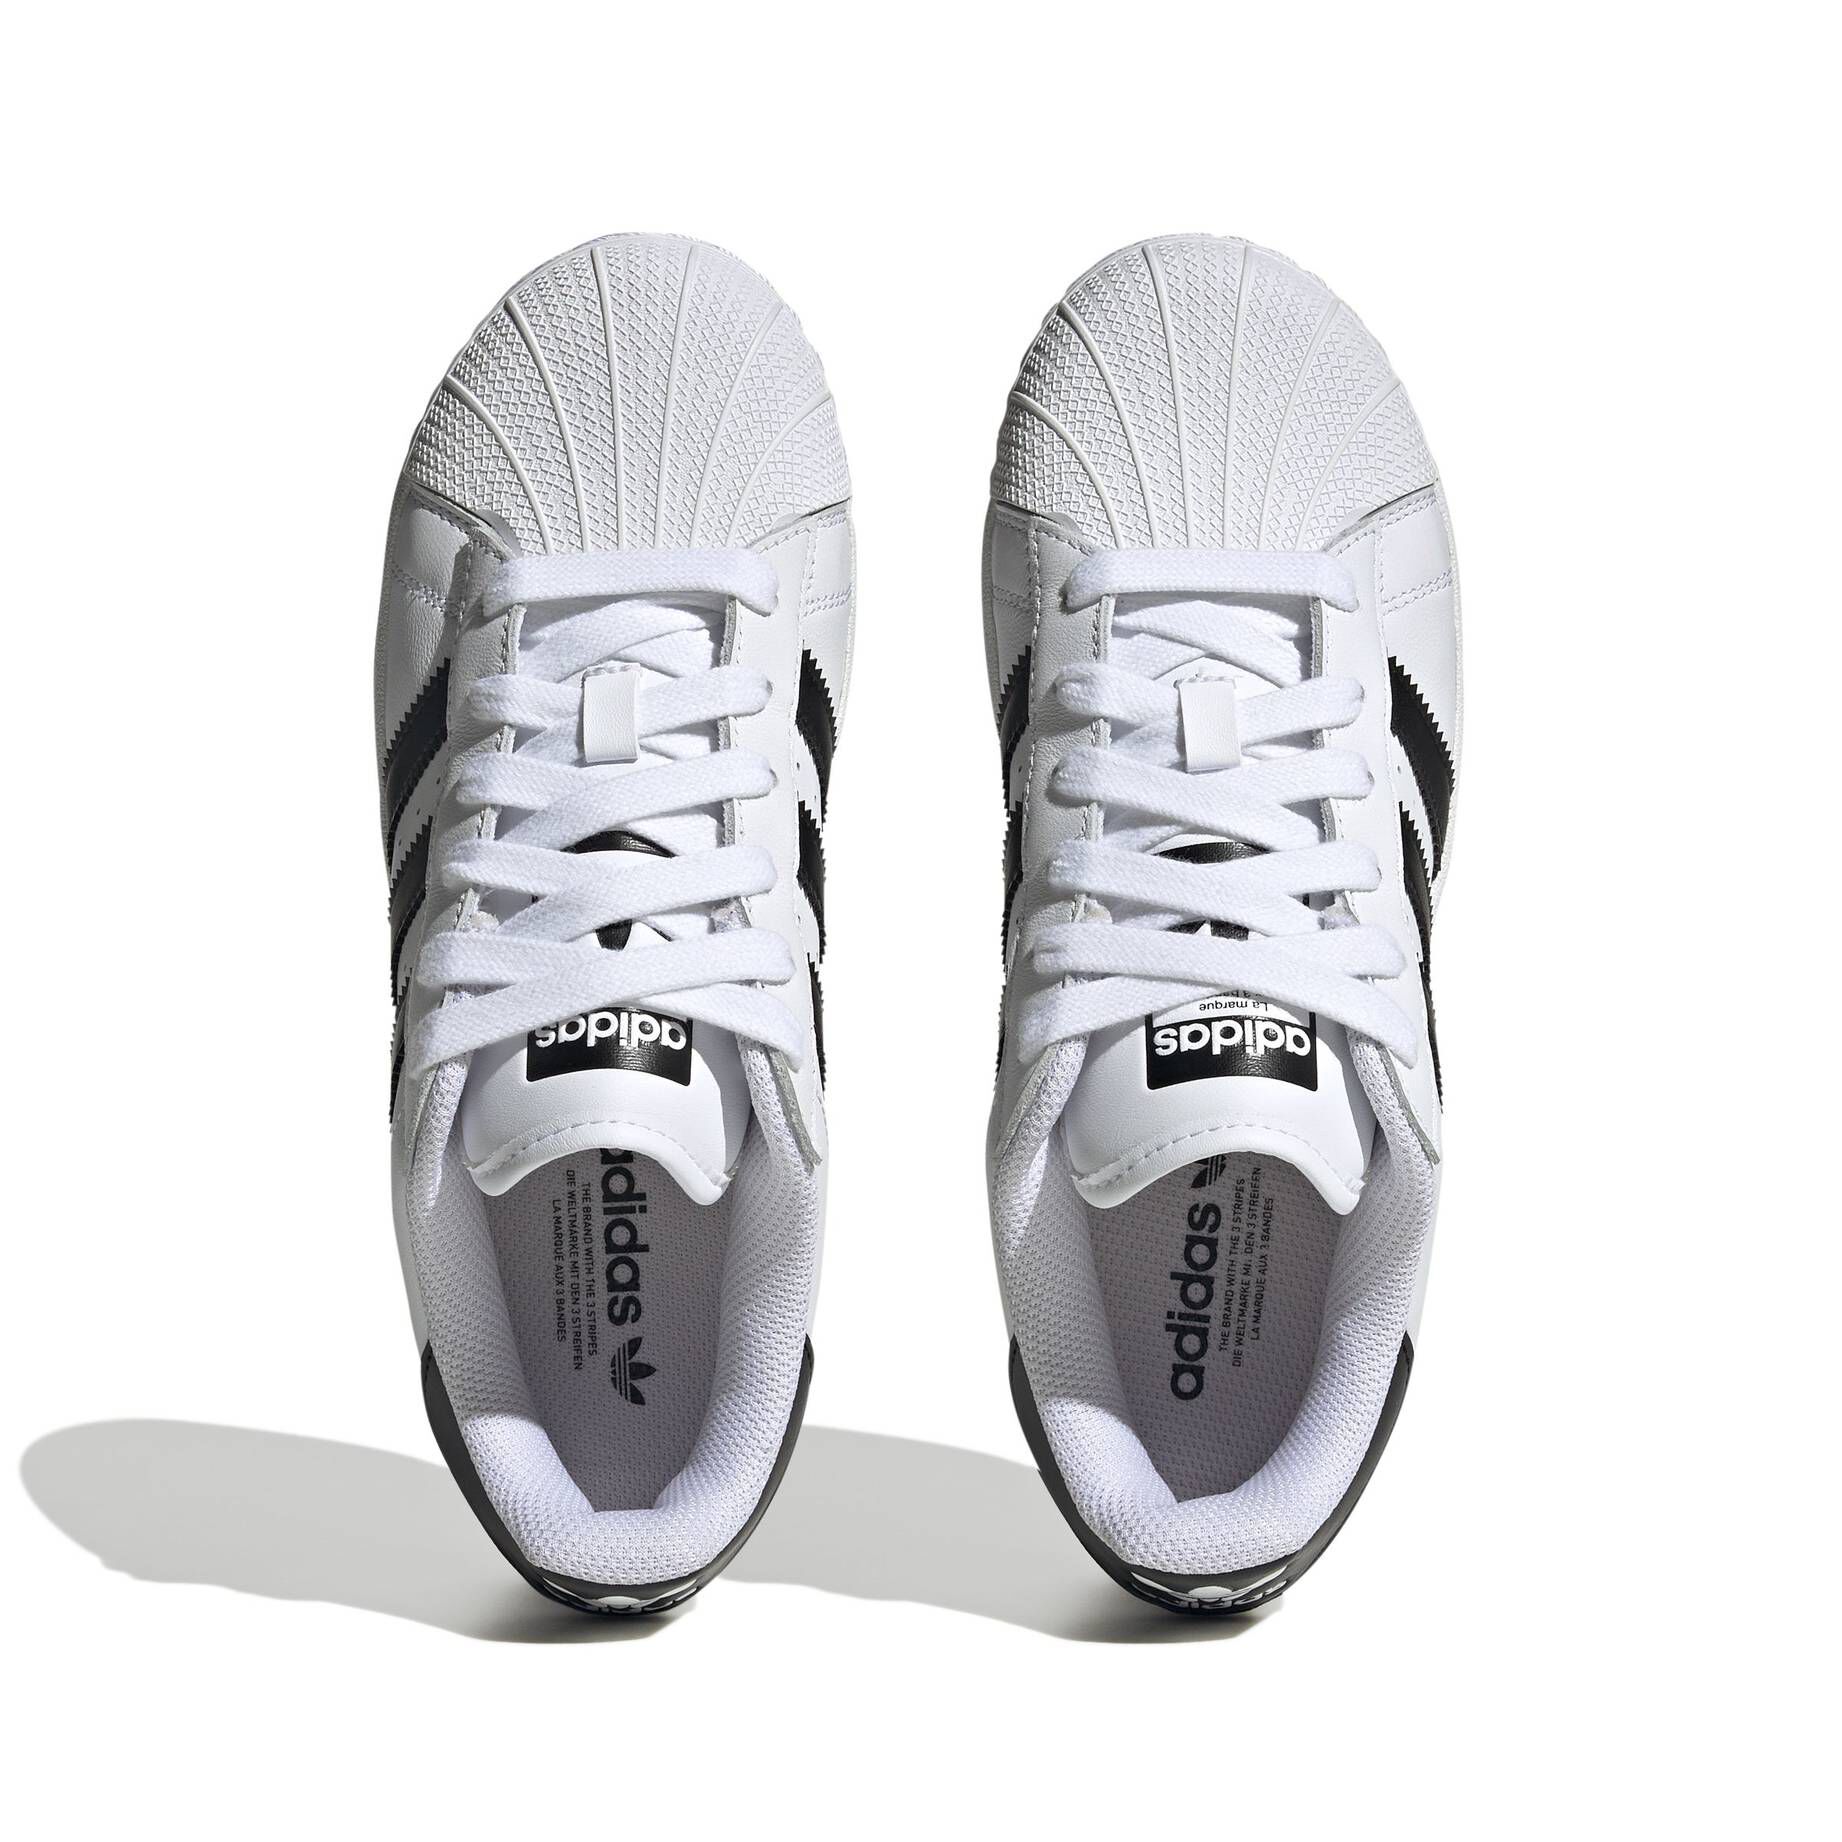 engelhorn Damen adidas SUPERSTAR | XLG Sneaker kaufen Originals